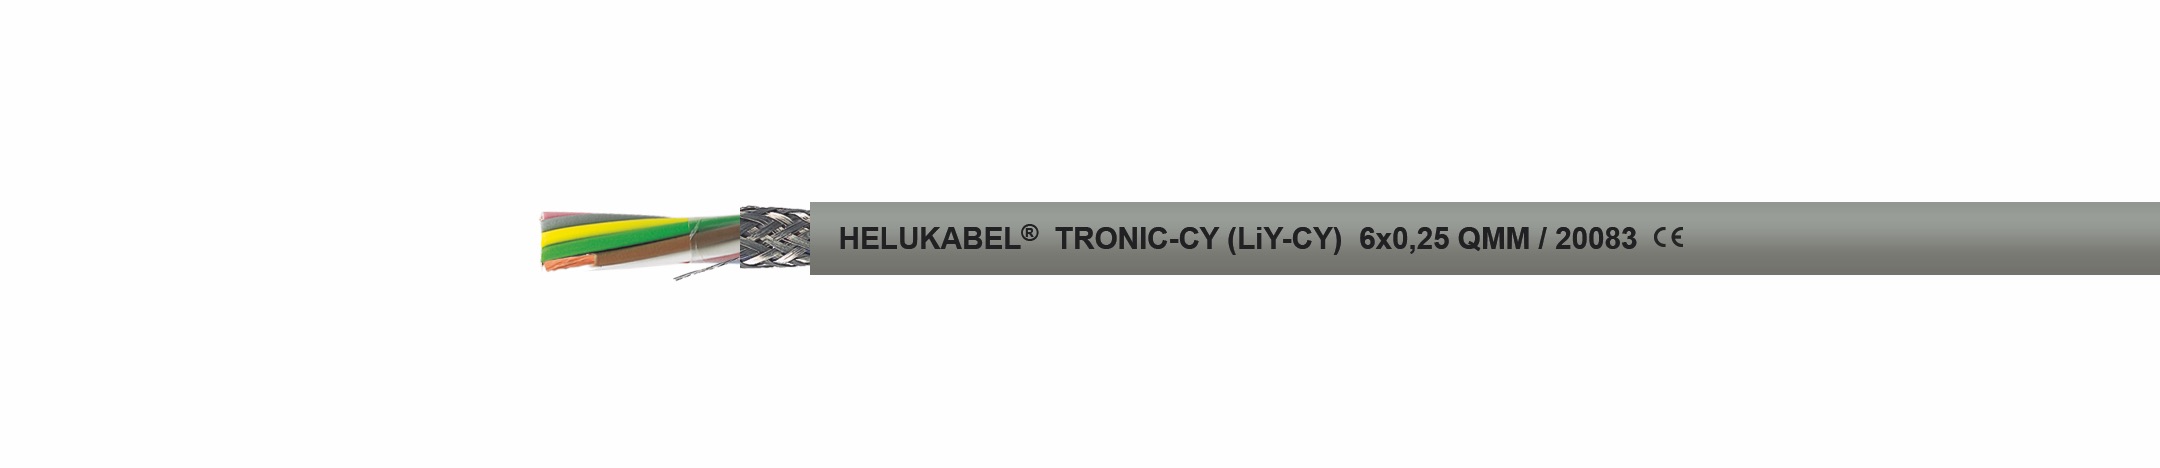 Cable Helukabel: TRONIC-CY (LiY-CY)